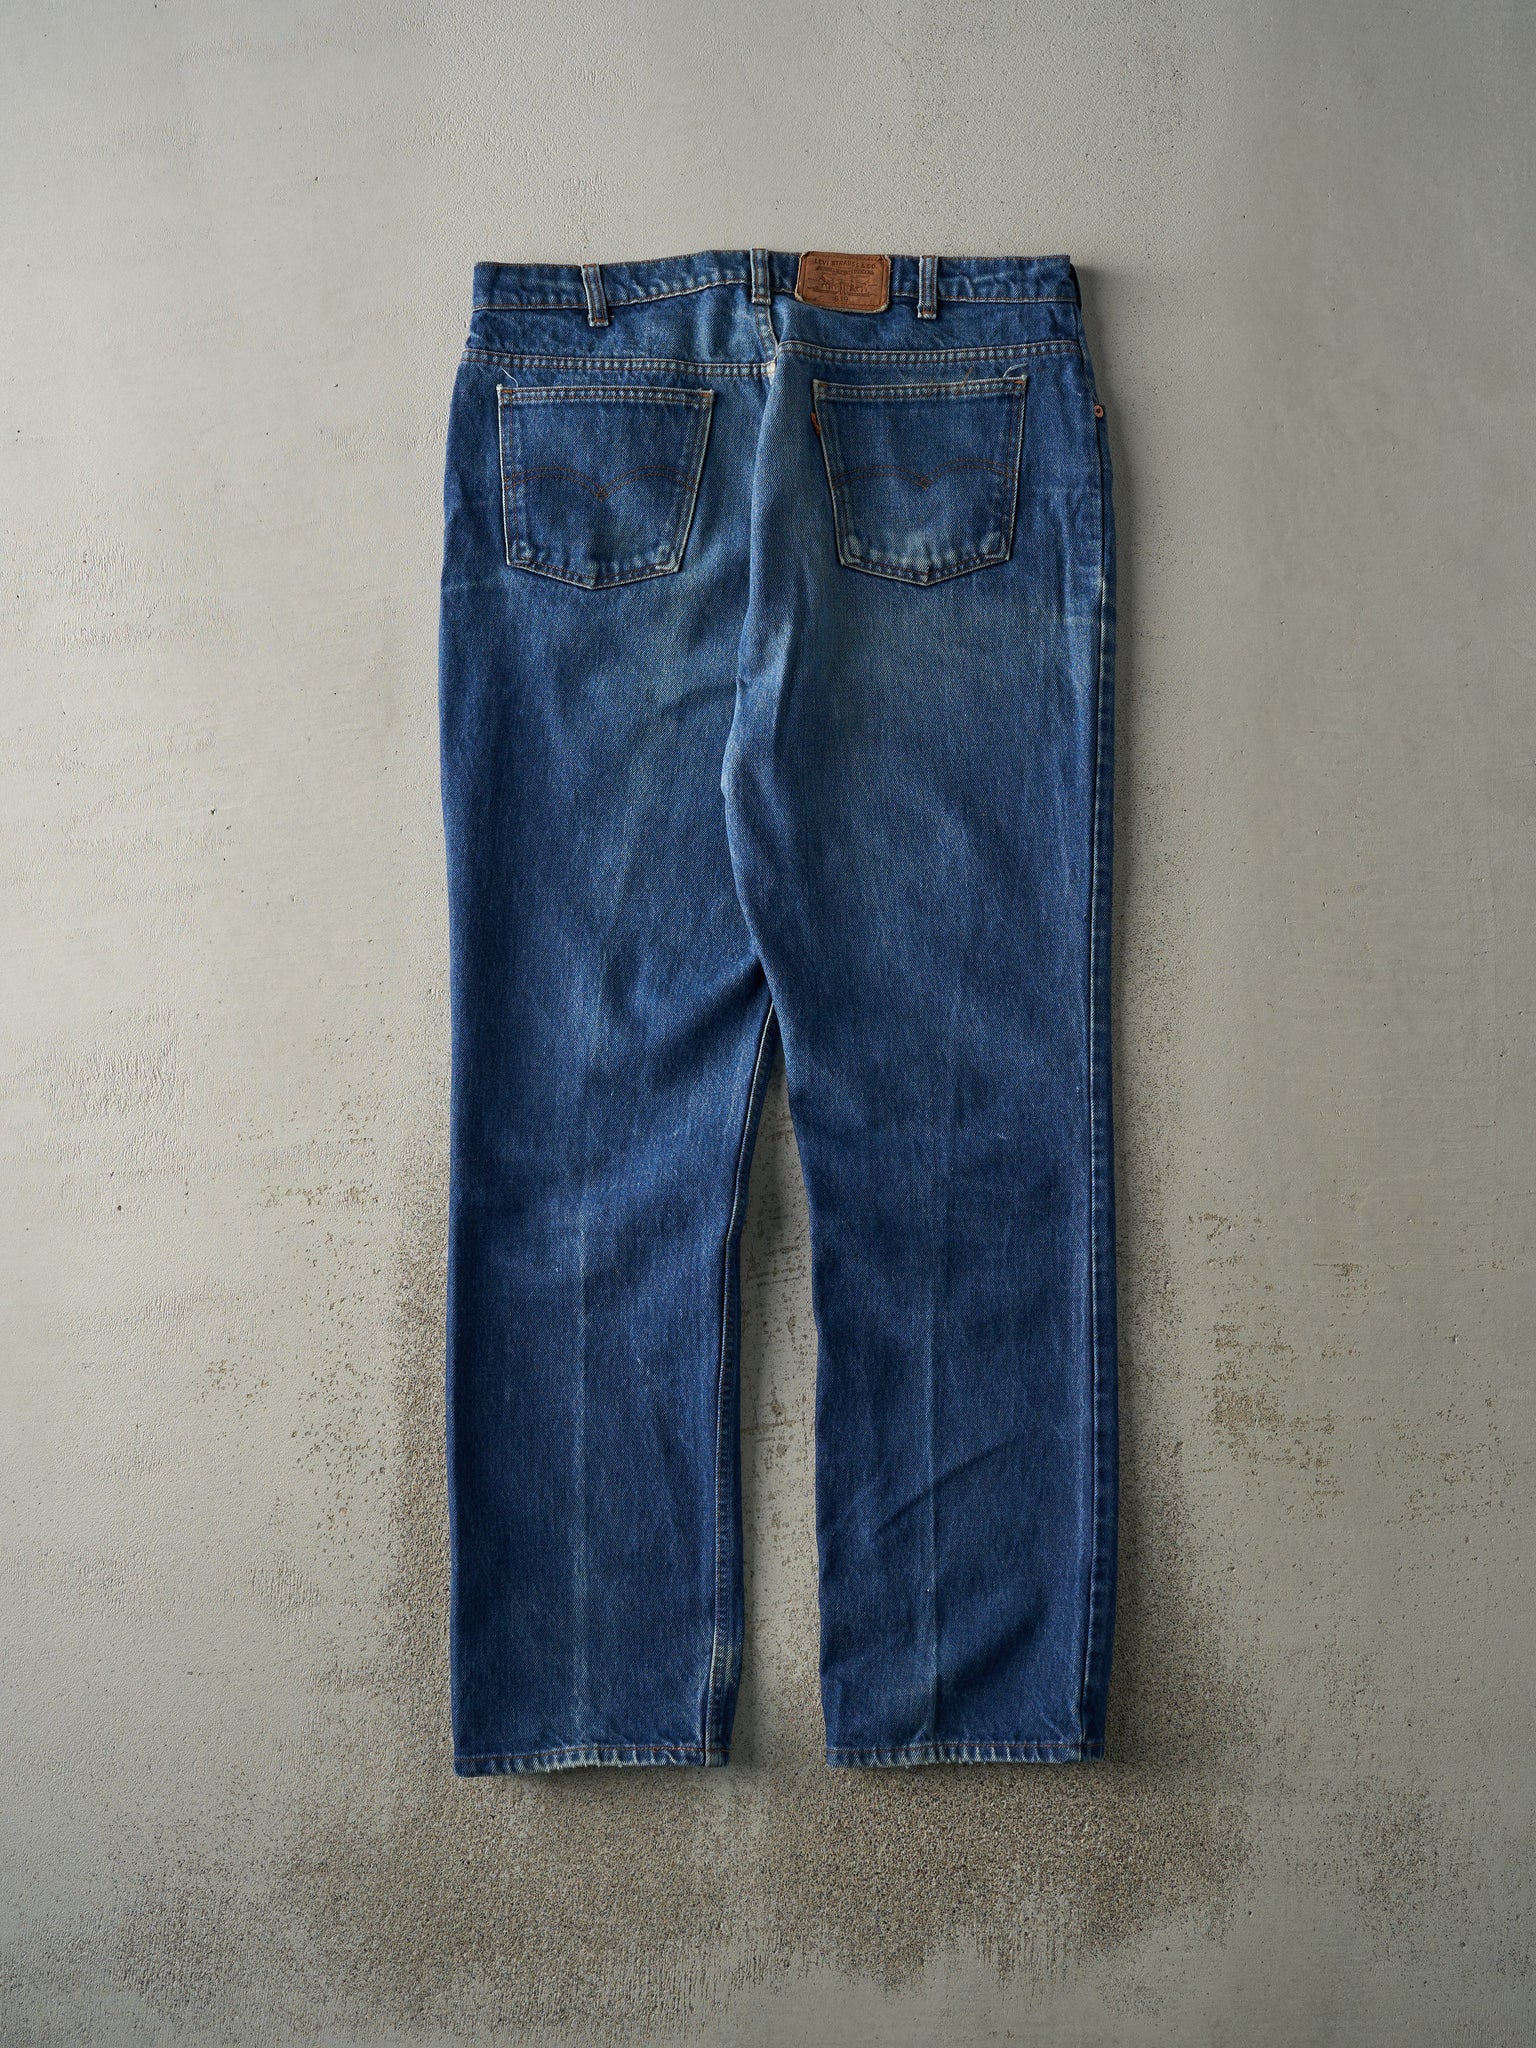 Vintage 80s Dark Wash Levi's 619 Orange Tab Jeans (36x33)